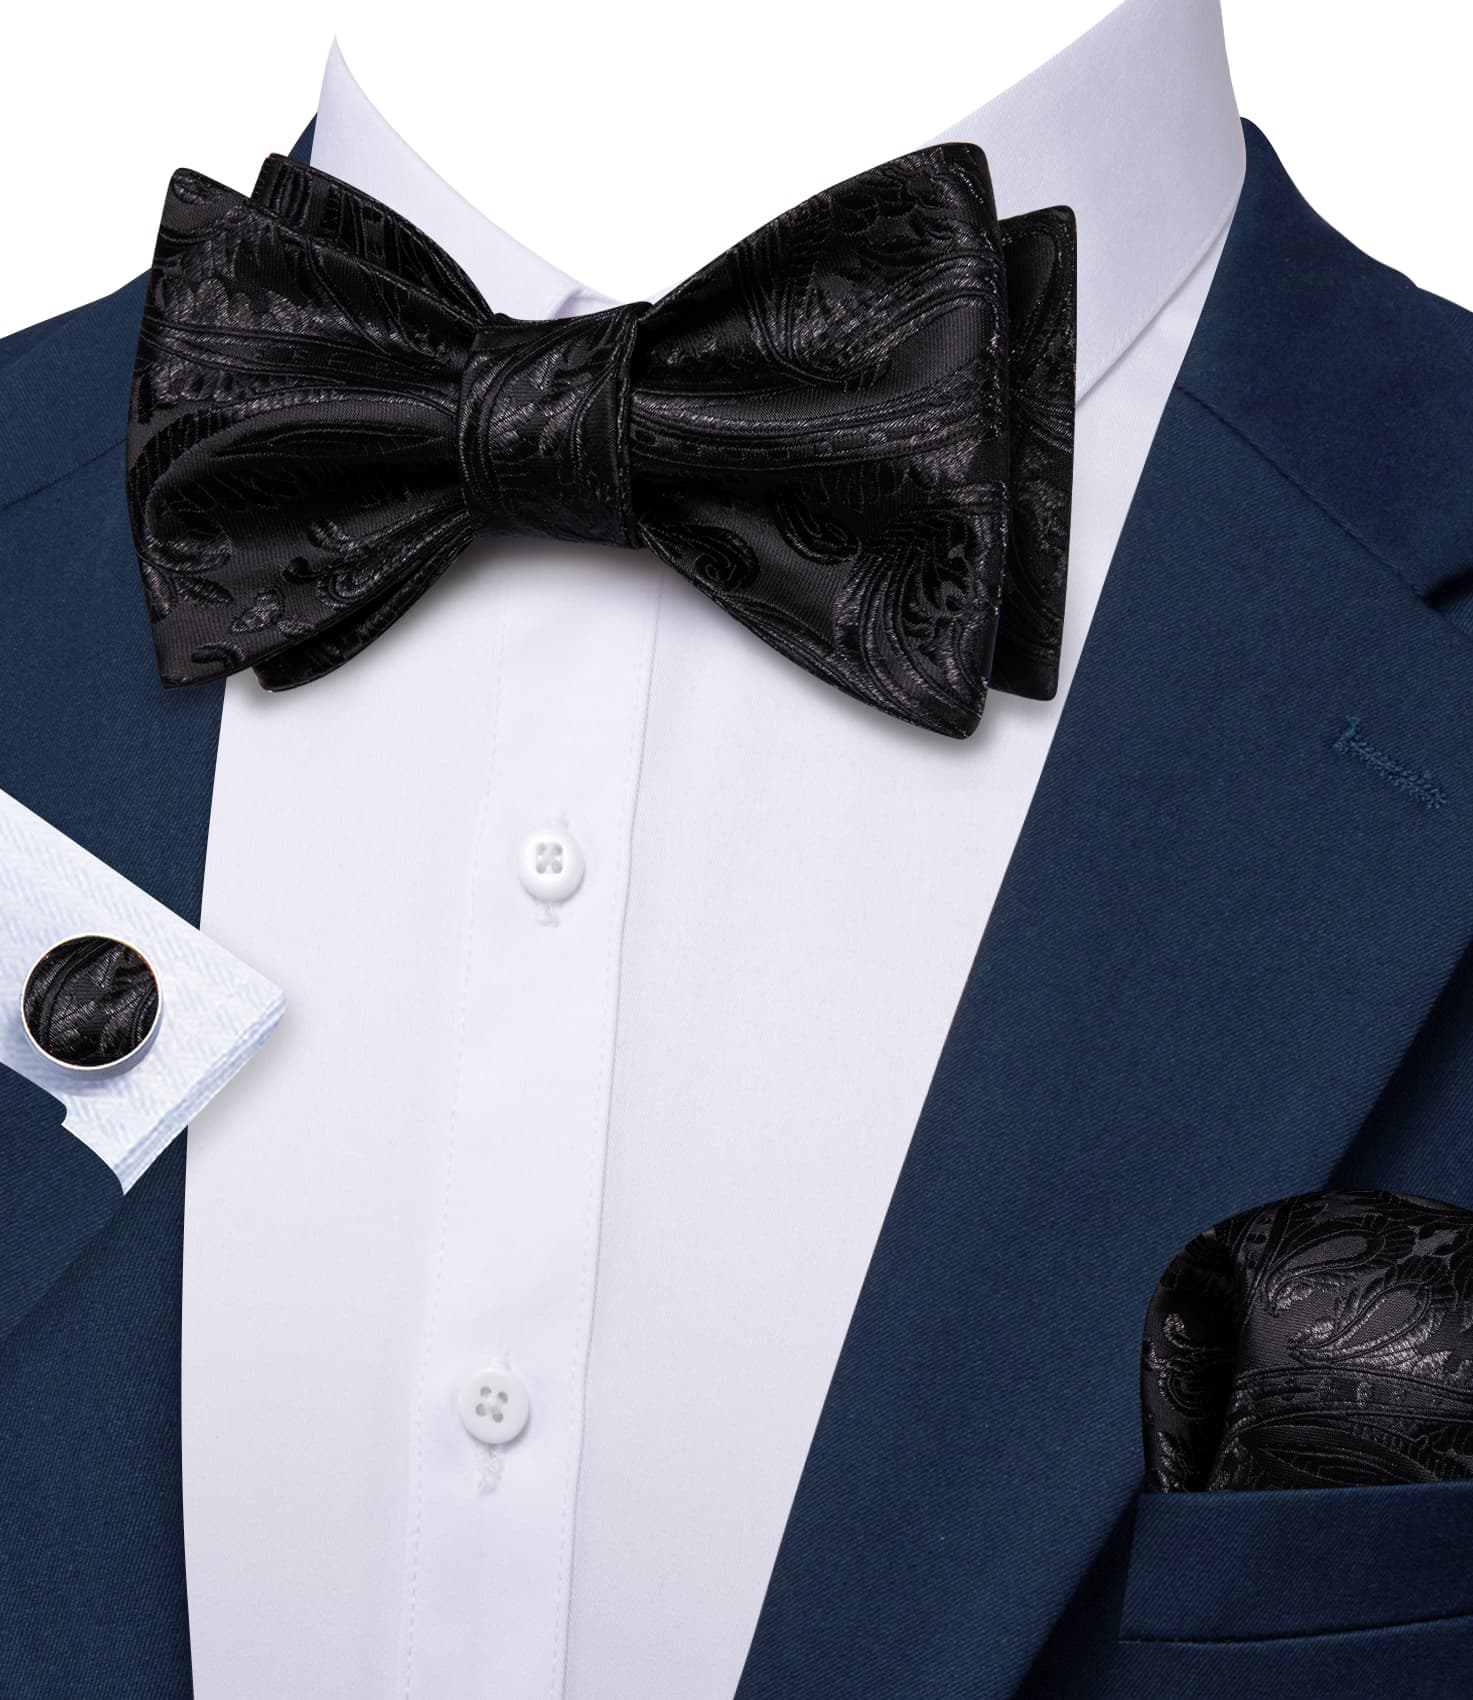 Navy Blue suit and black paisley bow tie foe men wedding 